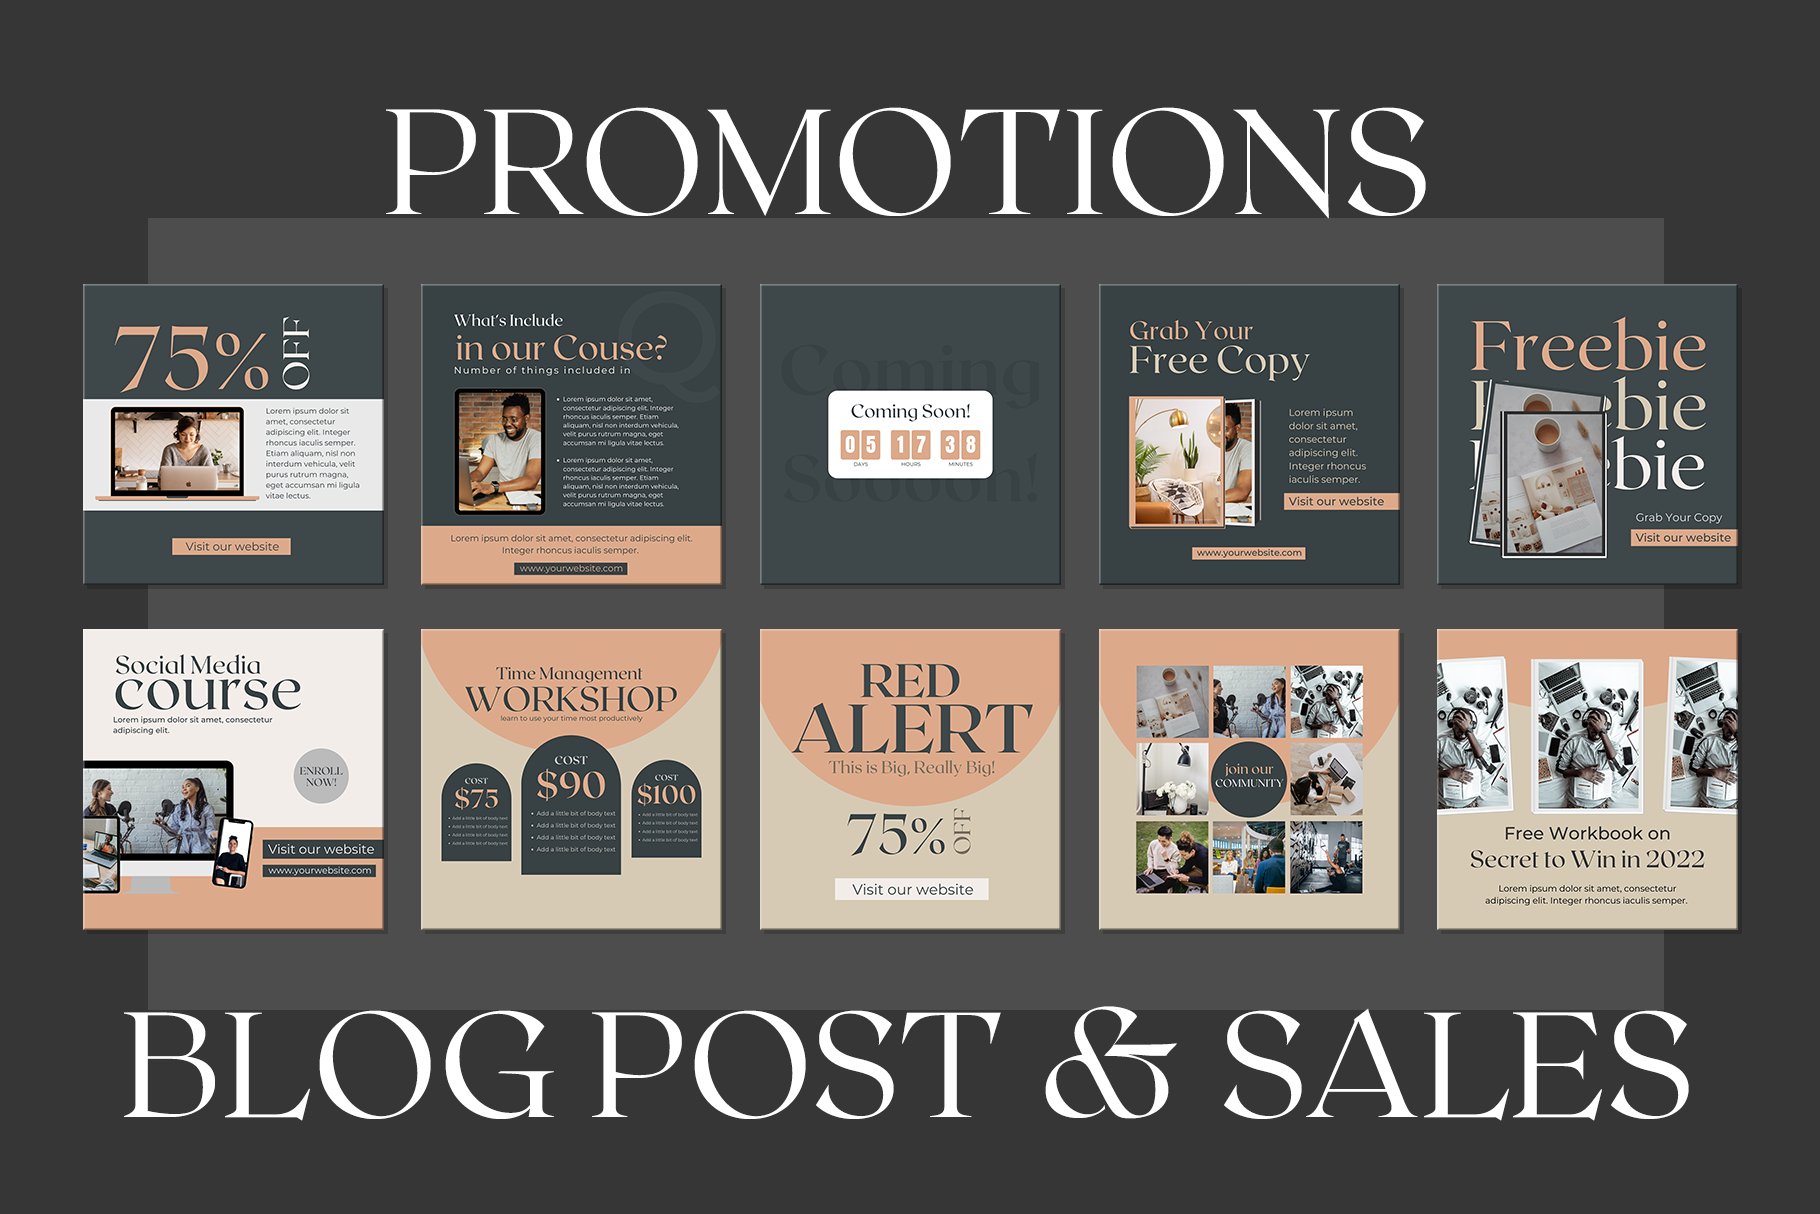 Promotions blog post & sales.